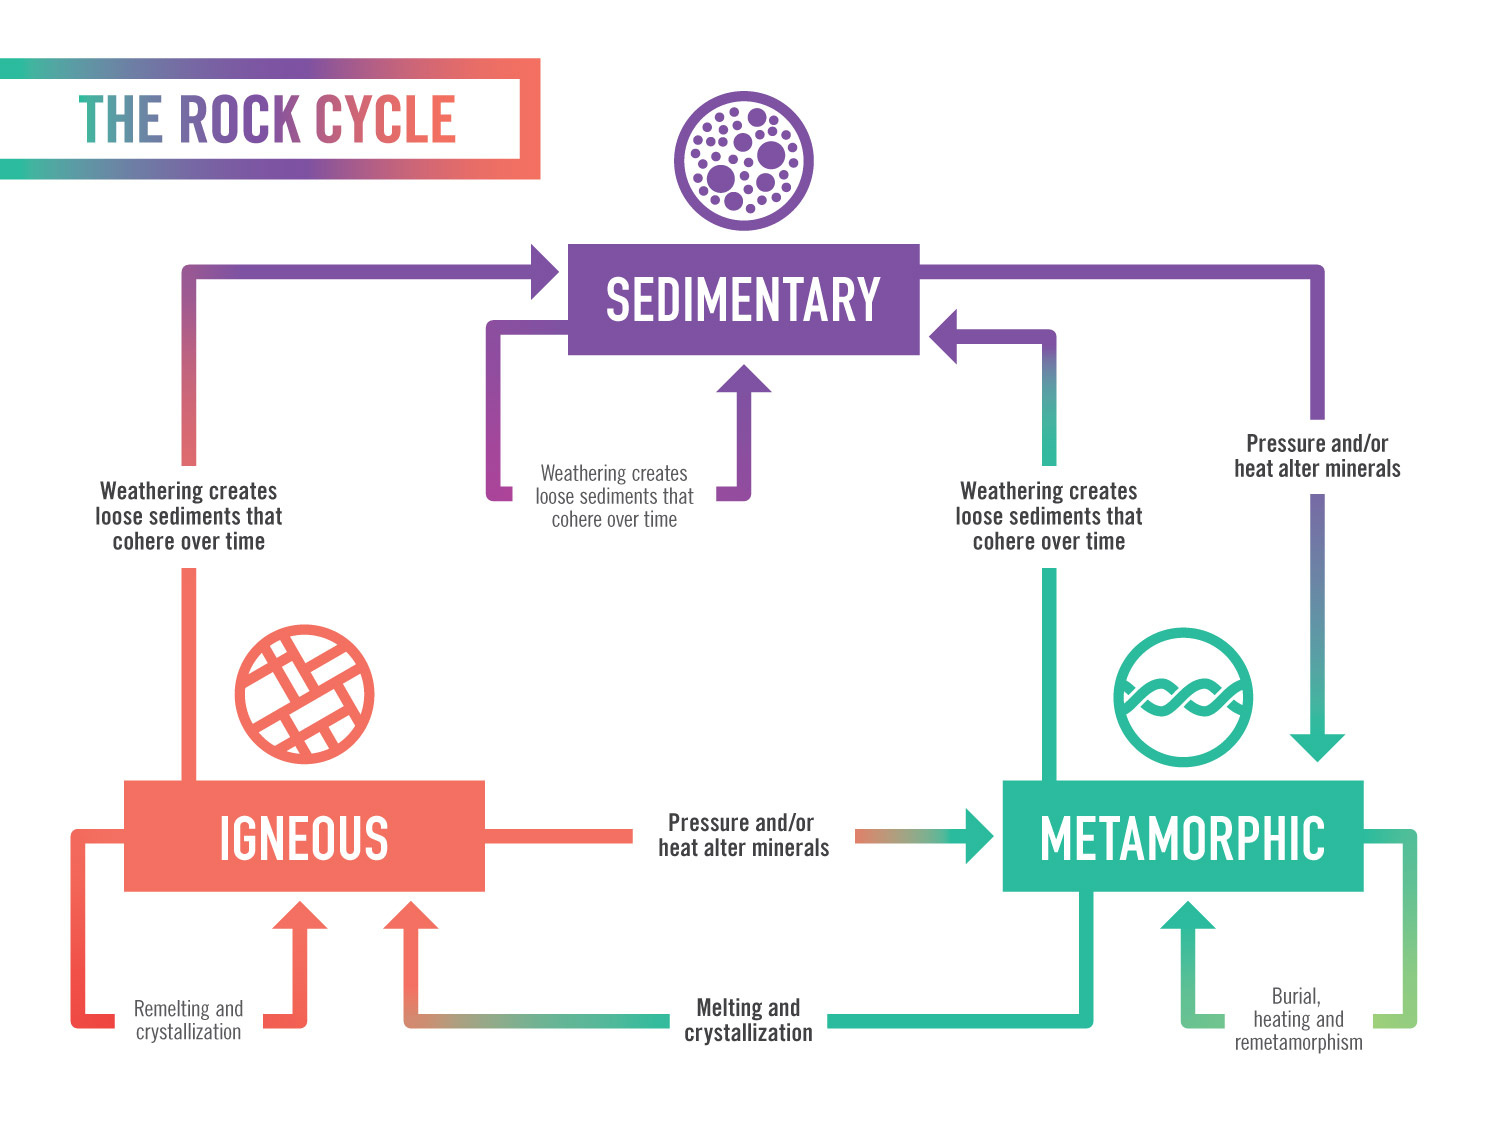 Rock Cycle Diagram The Rock Cycle Diagram Chris Gajus On Dribbble